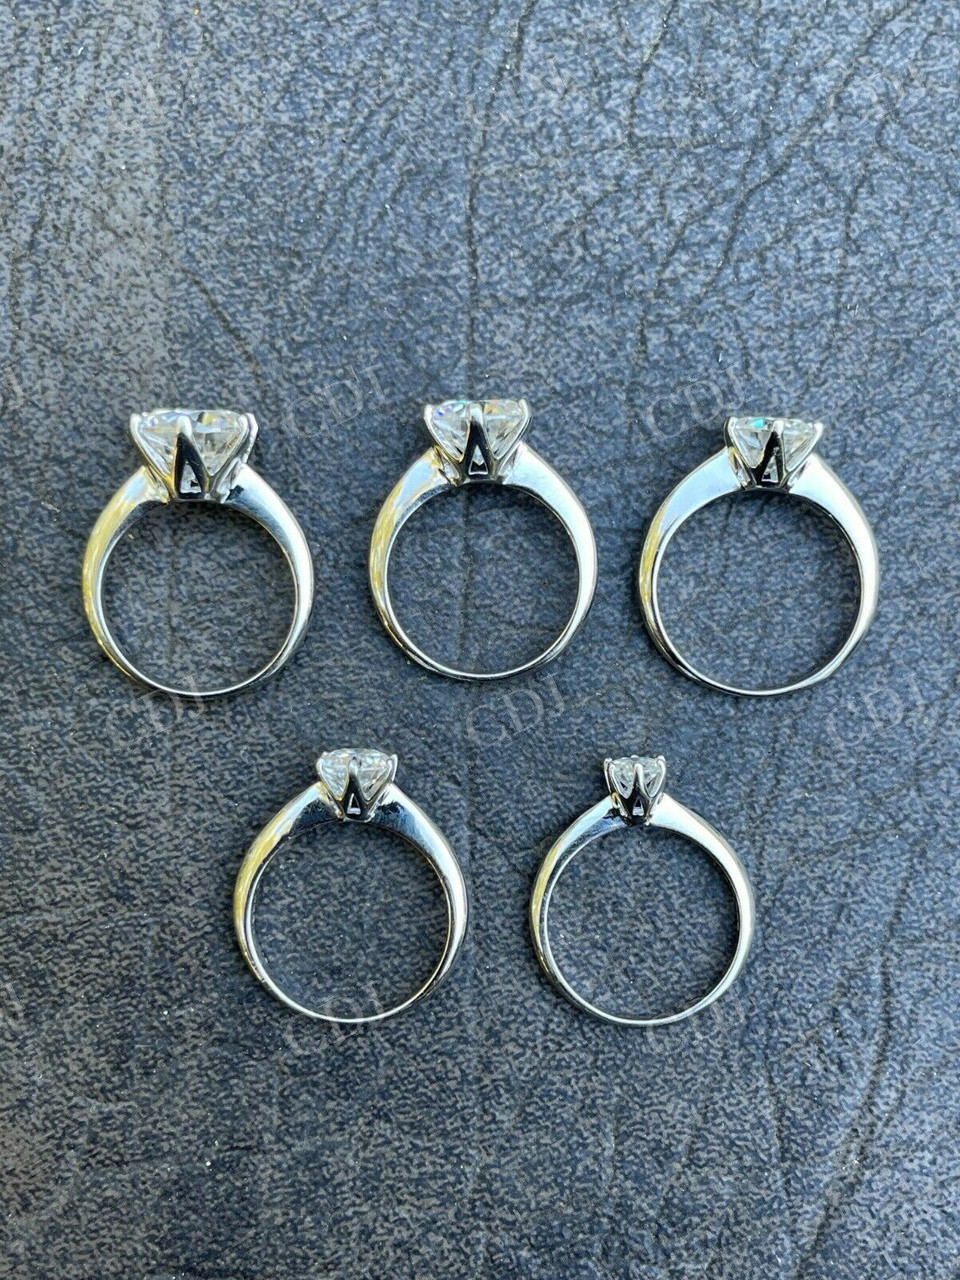 Round Cut Solitaire Moissanite Engagement Ring  customdiamjewel   